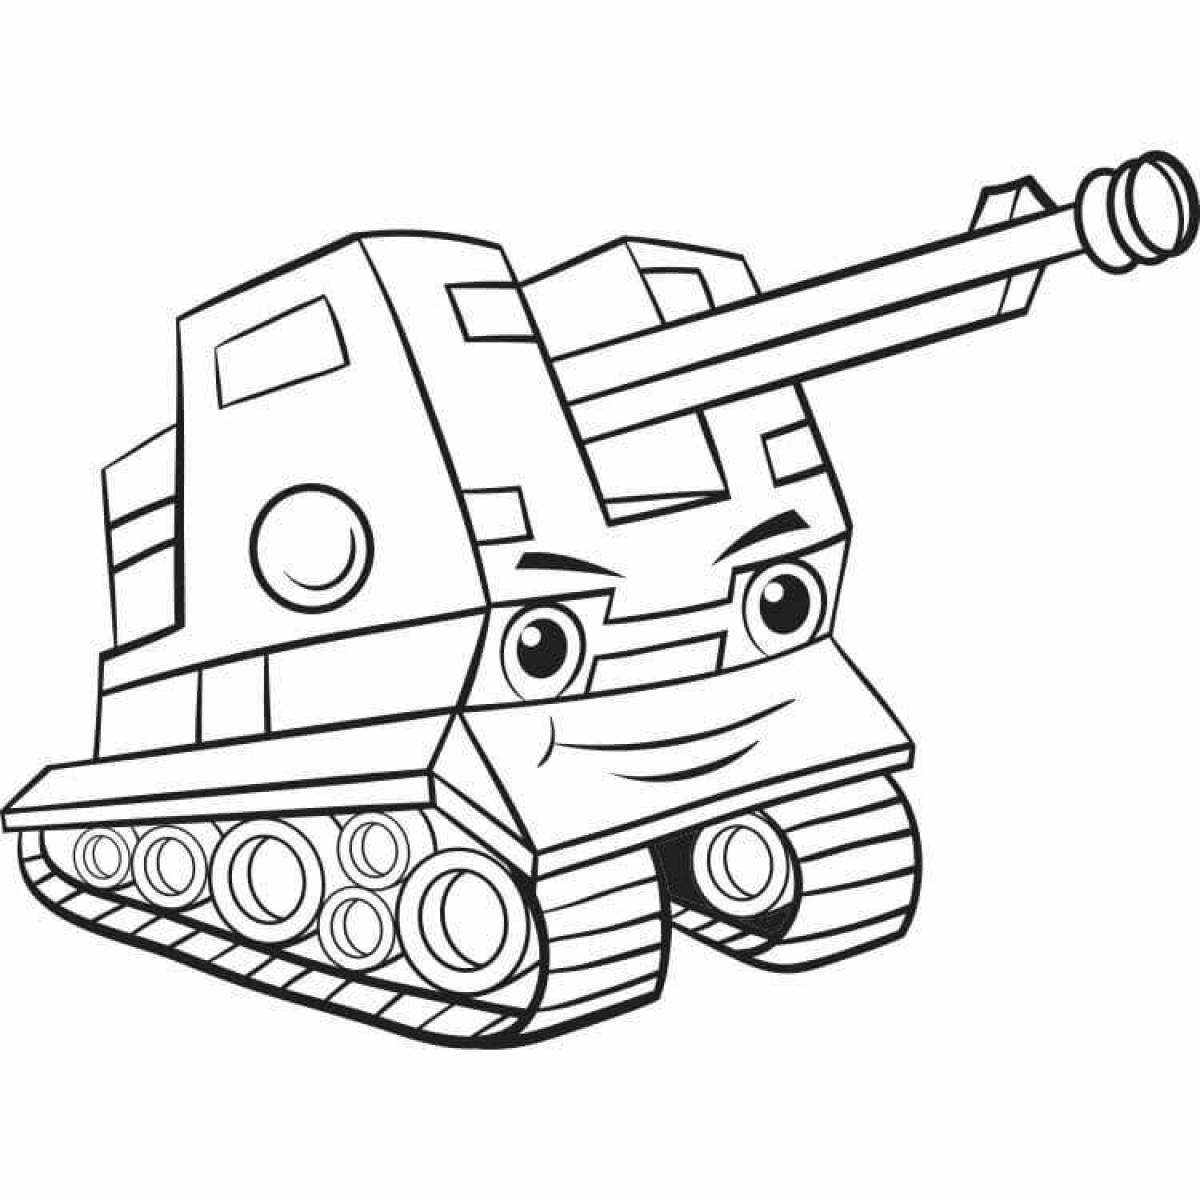 Kv44 dazzling tank coloring page